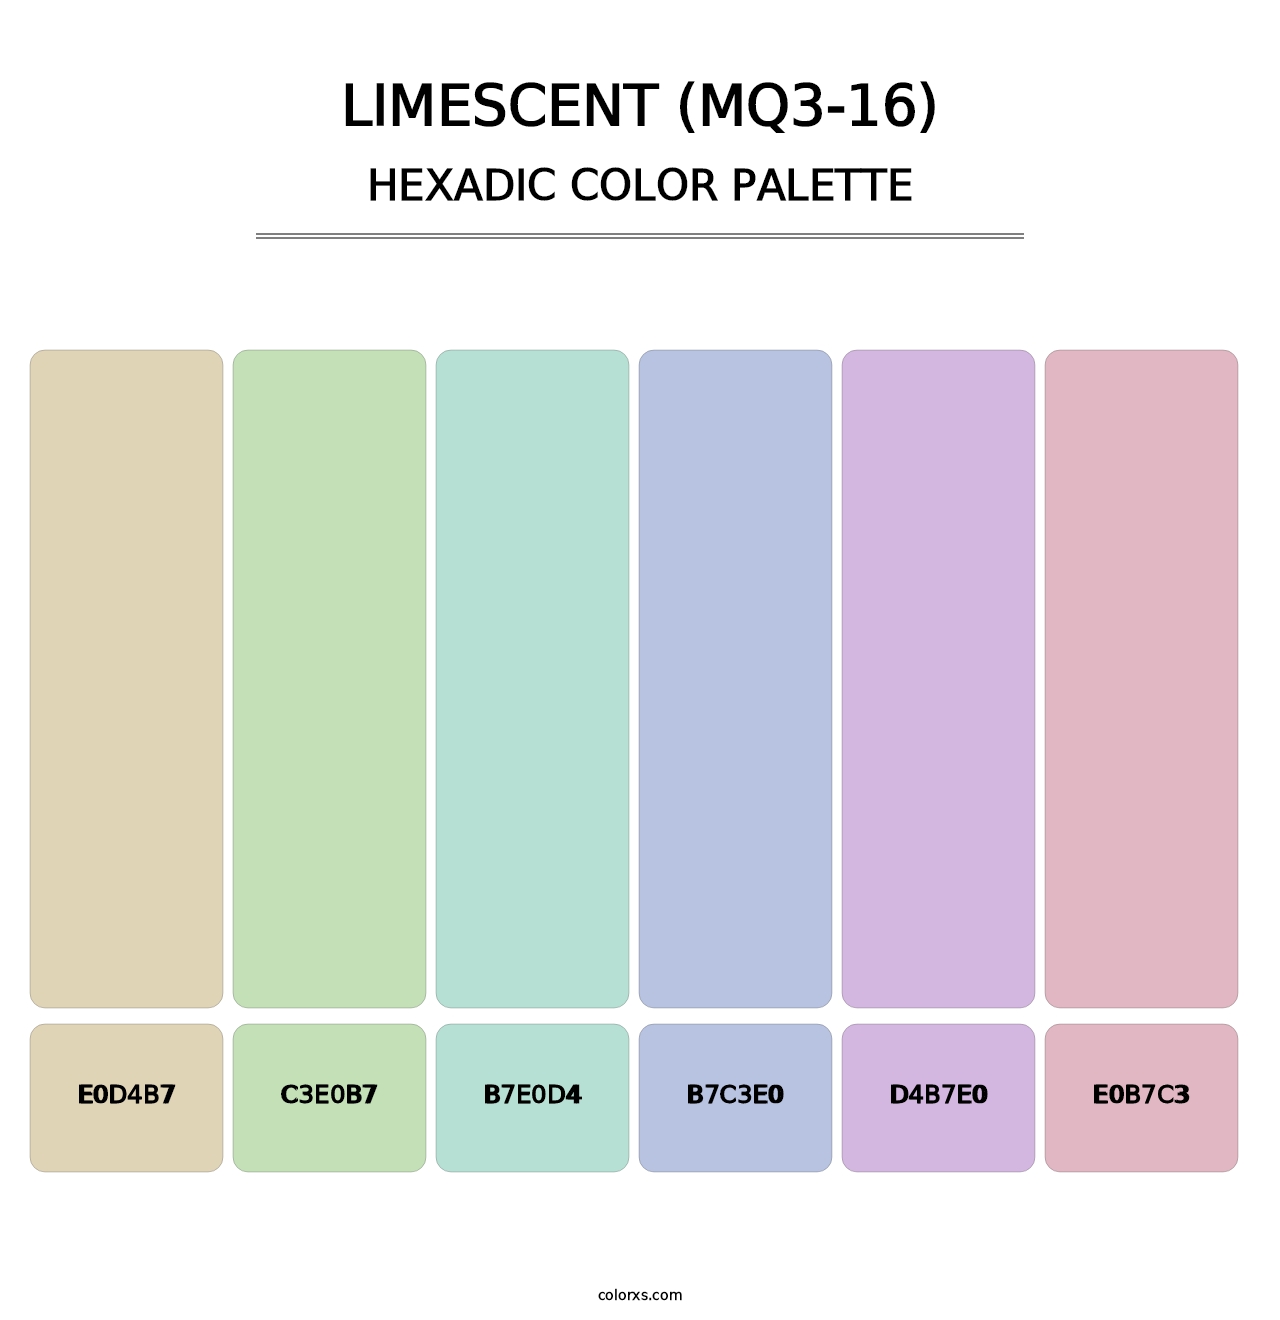 Limescent (MQ3-16) - Hexadic Color Palette